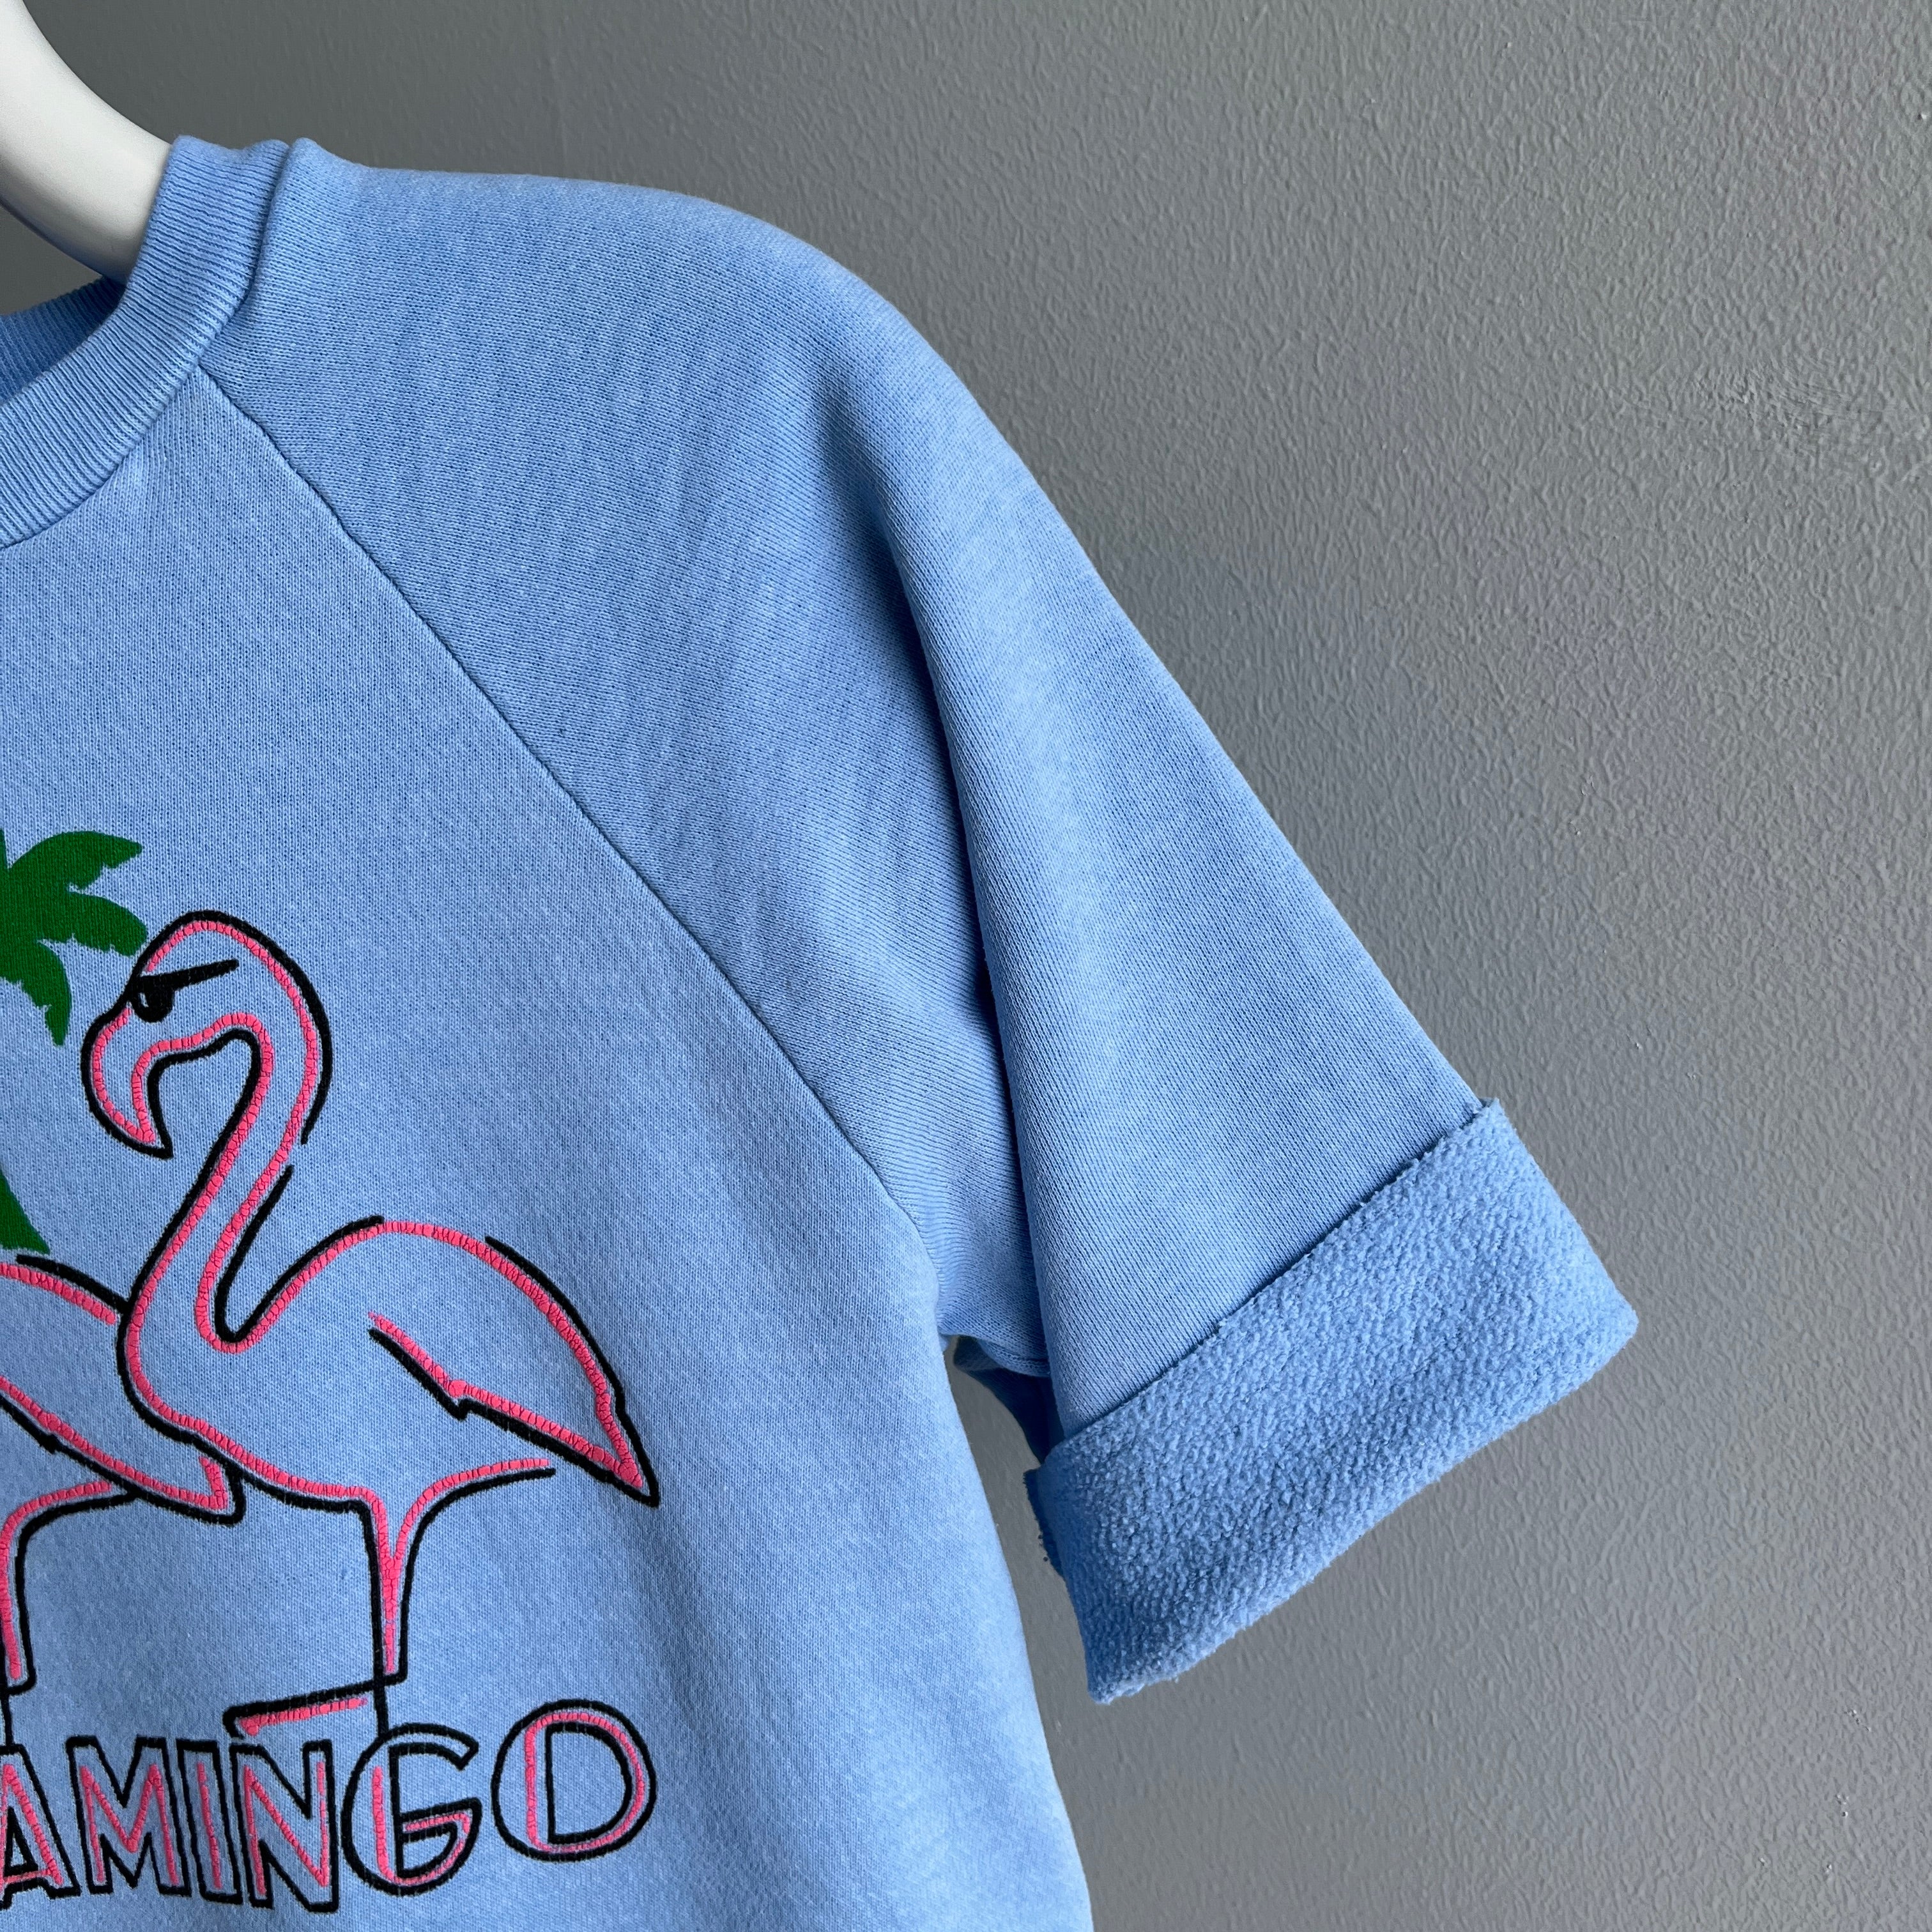 1980s Flamingo Club Cut 1/2 Sleeve Cropped Sweatshirt - WOW